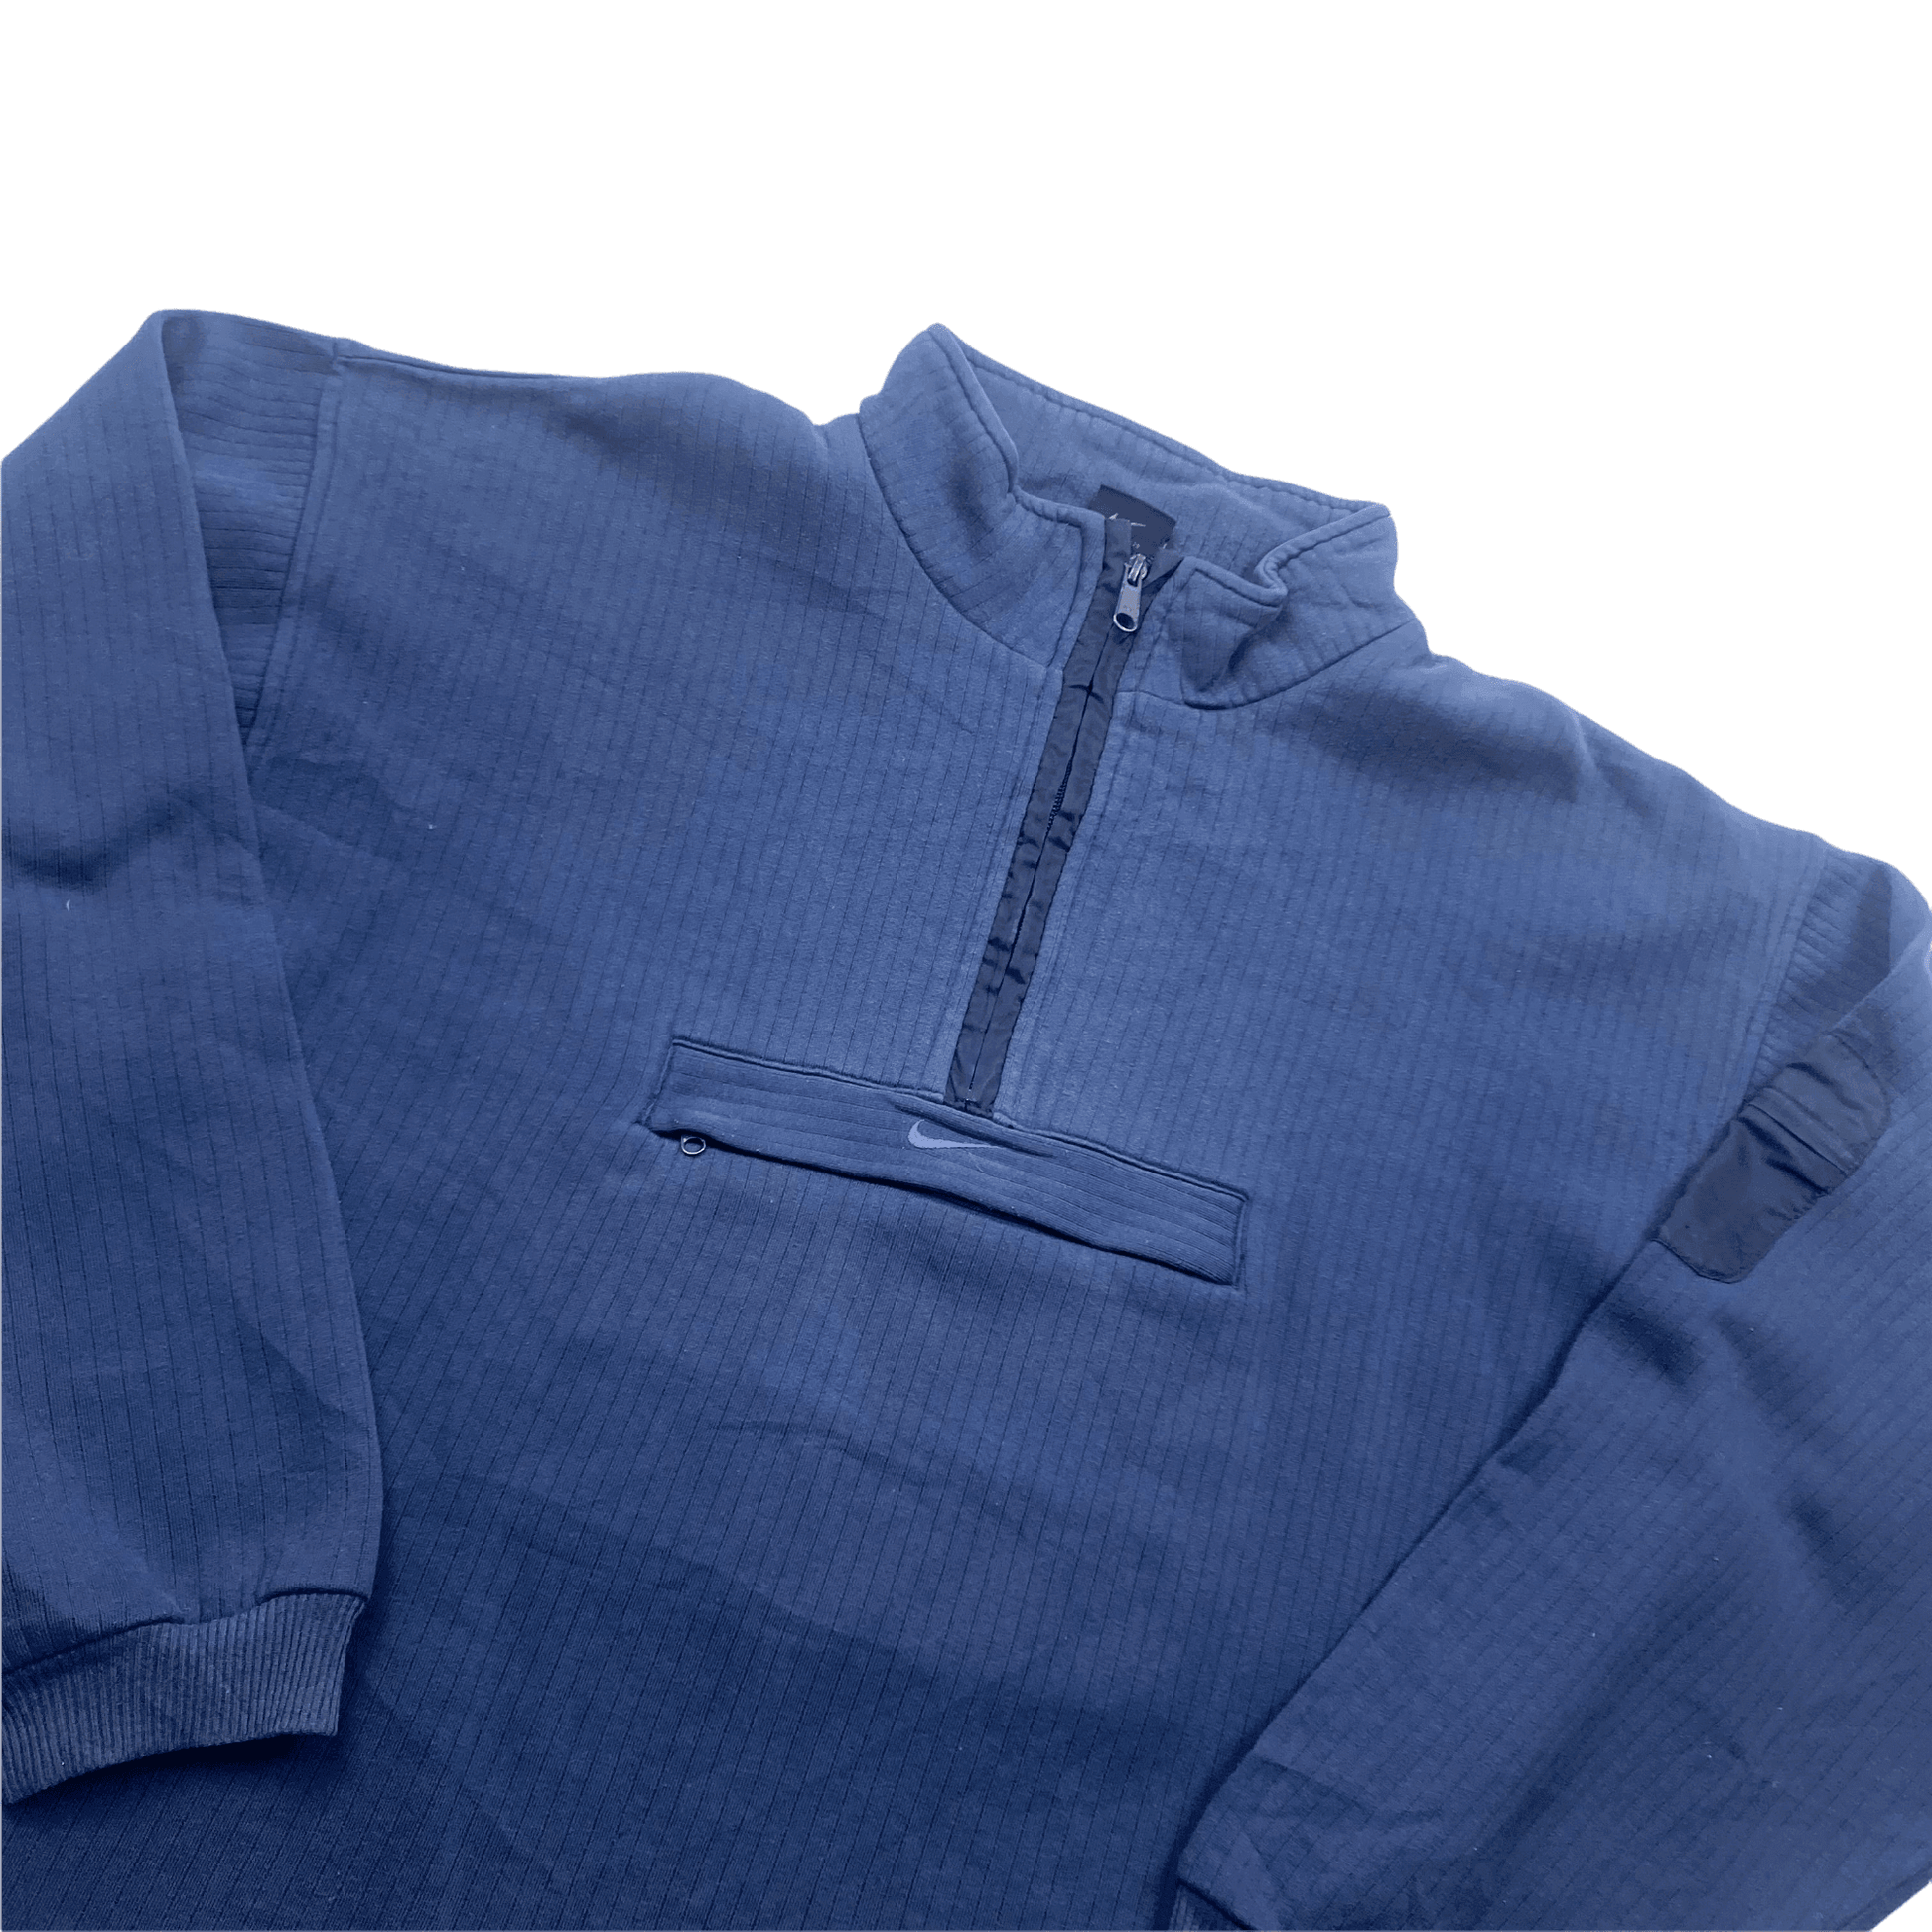 Vintage 90s Navy Blue Nike Centre Swoosh Oversized Quarter Zip Sweatshirt - Large (Recommended Size - Medium) - The Streetwear Studio